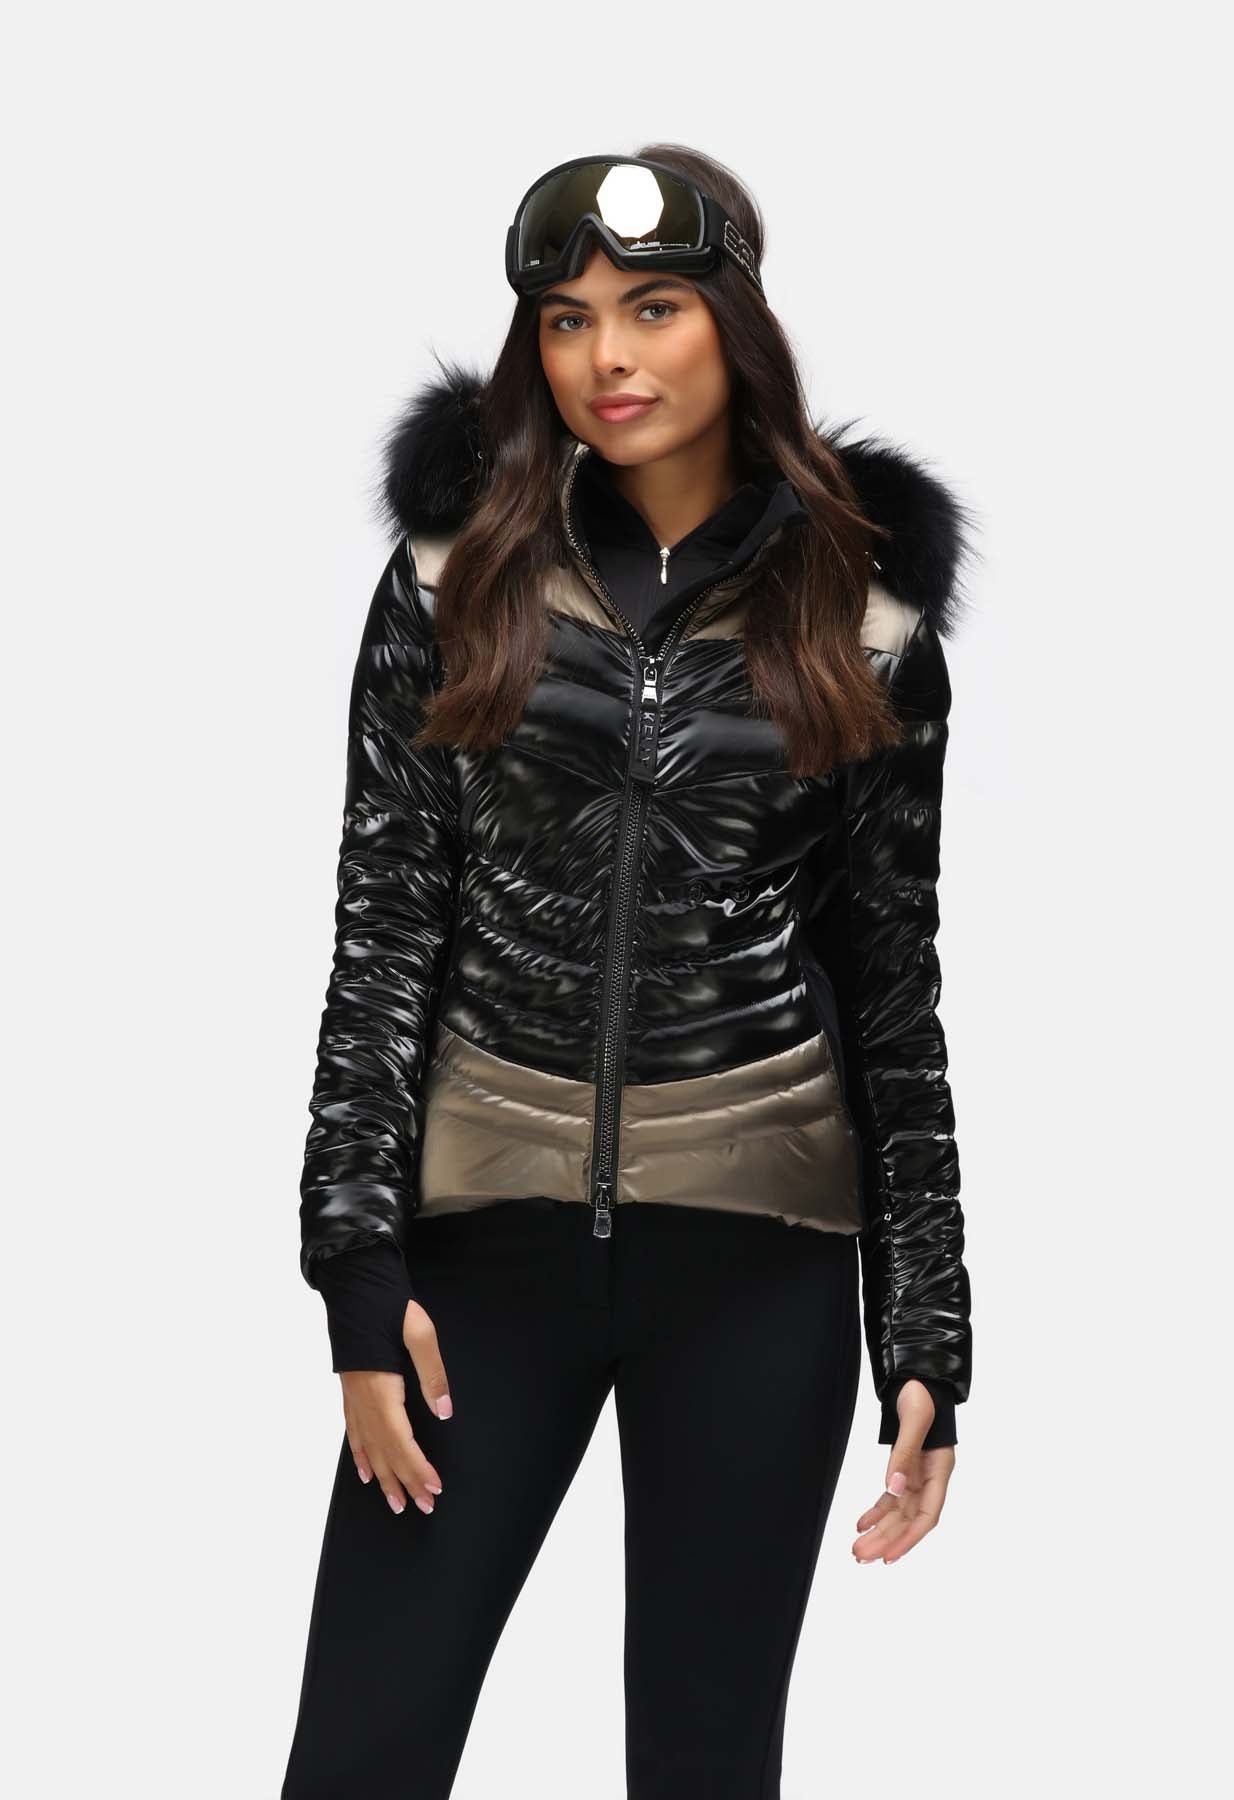 Kelly by Sissy Cosima Black Ski Jacket with Fur Trim